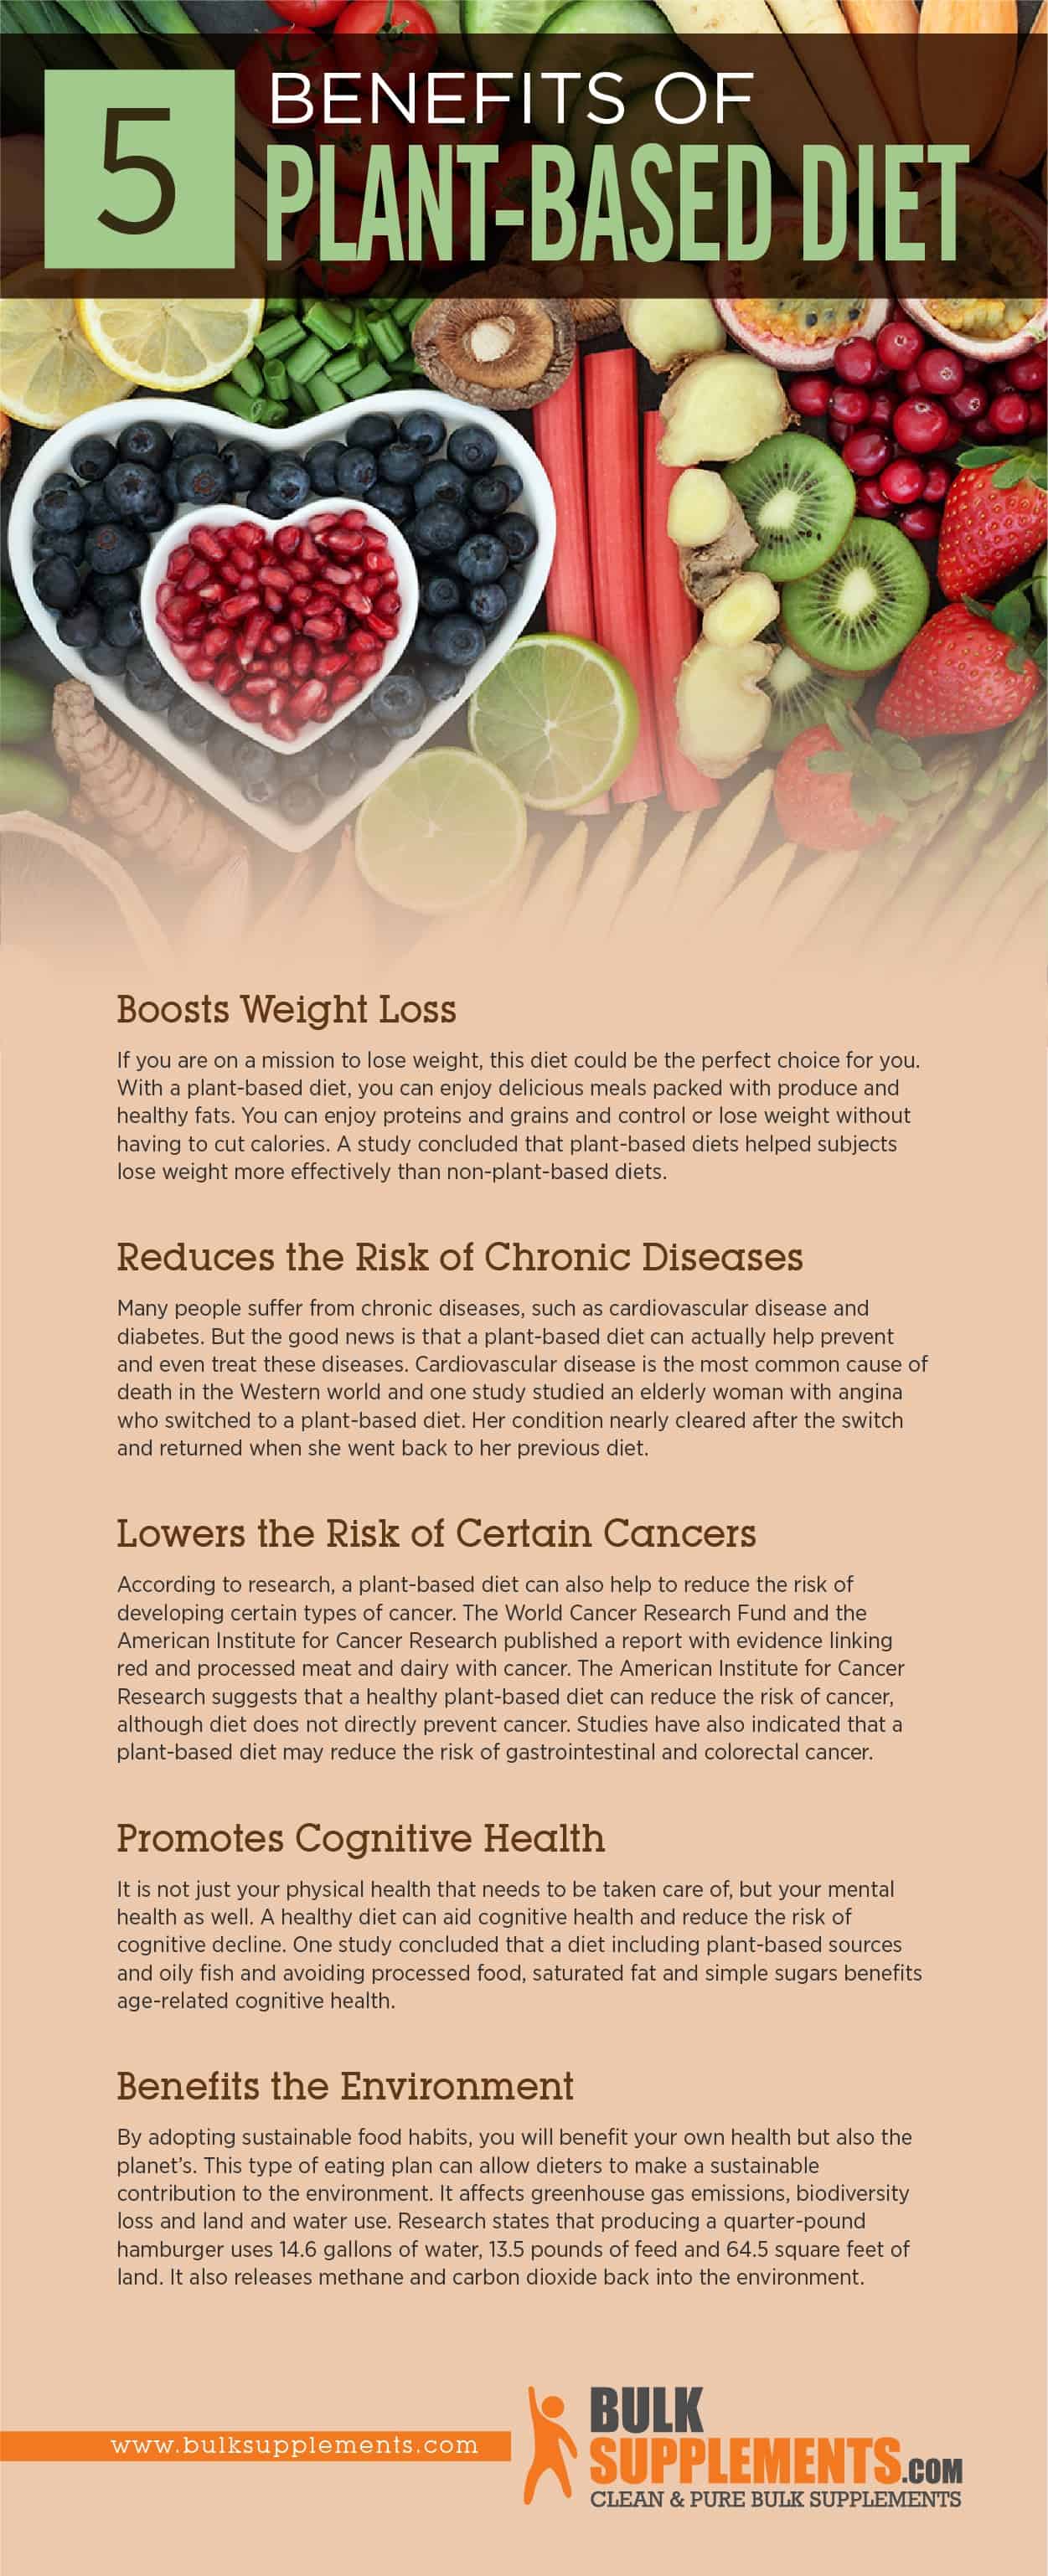 Plant-Based Diet Benefits